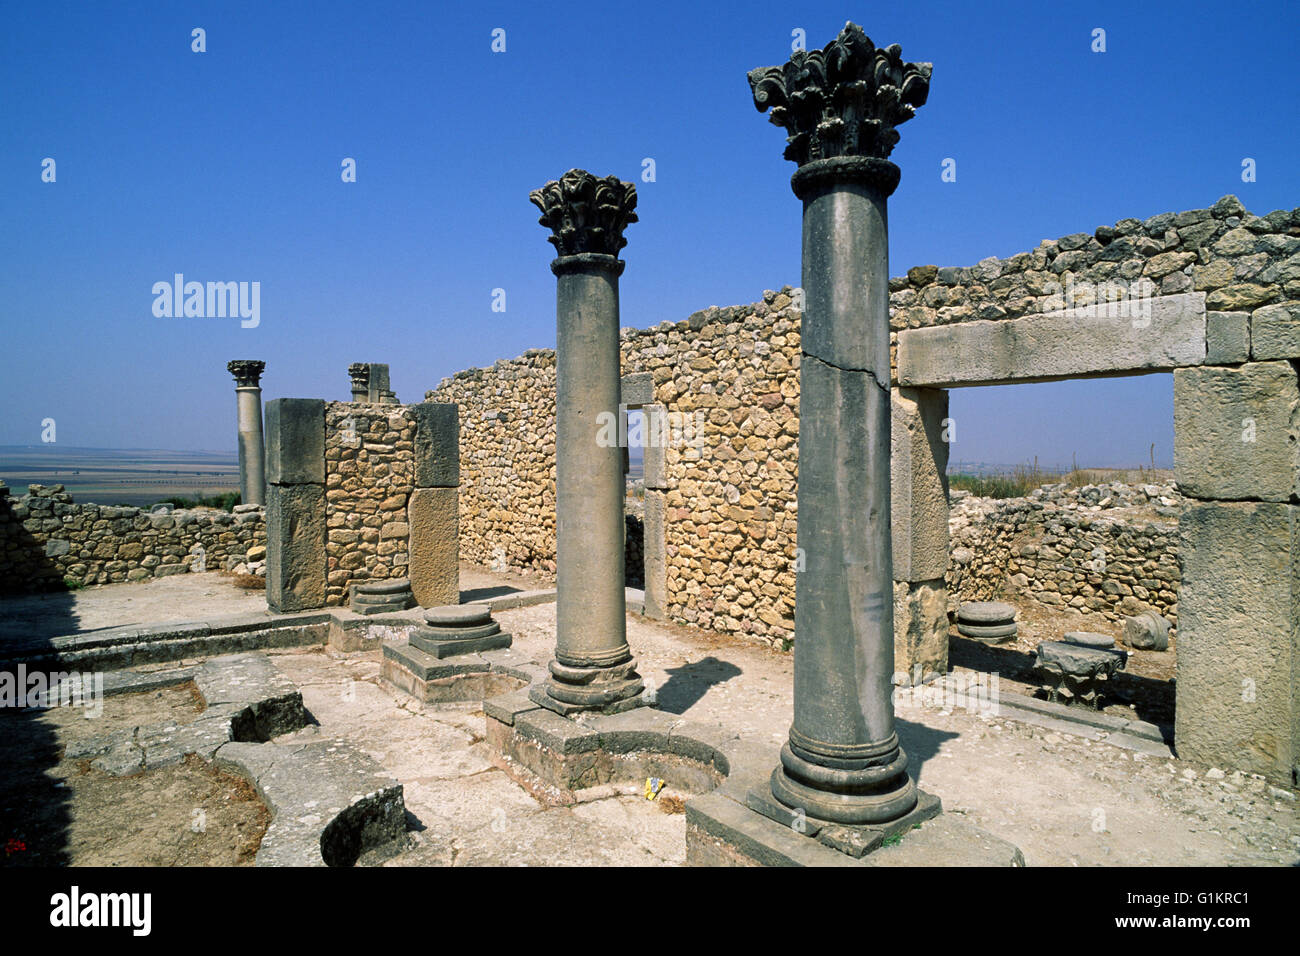 Morocco, Volubilis, ancient roman city, House of the Columns Stock Photo